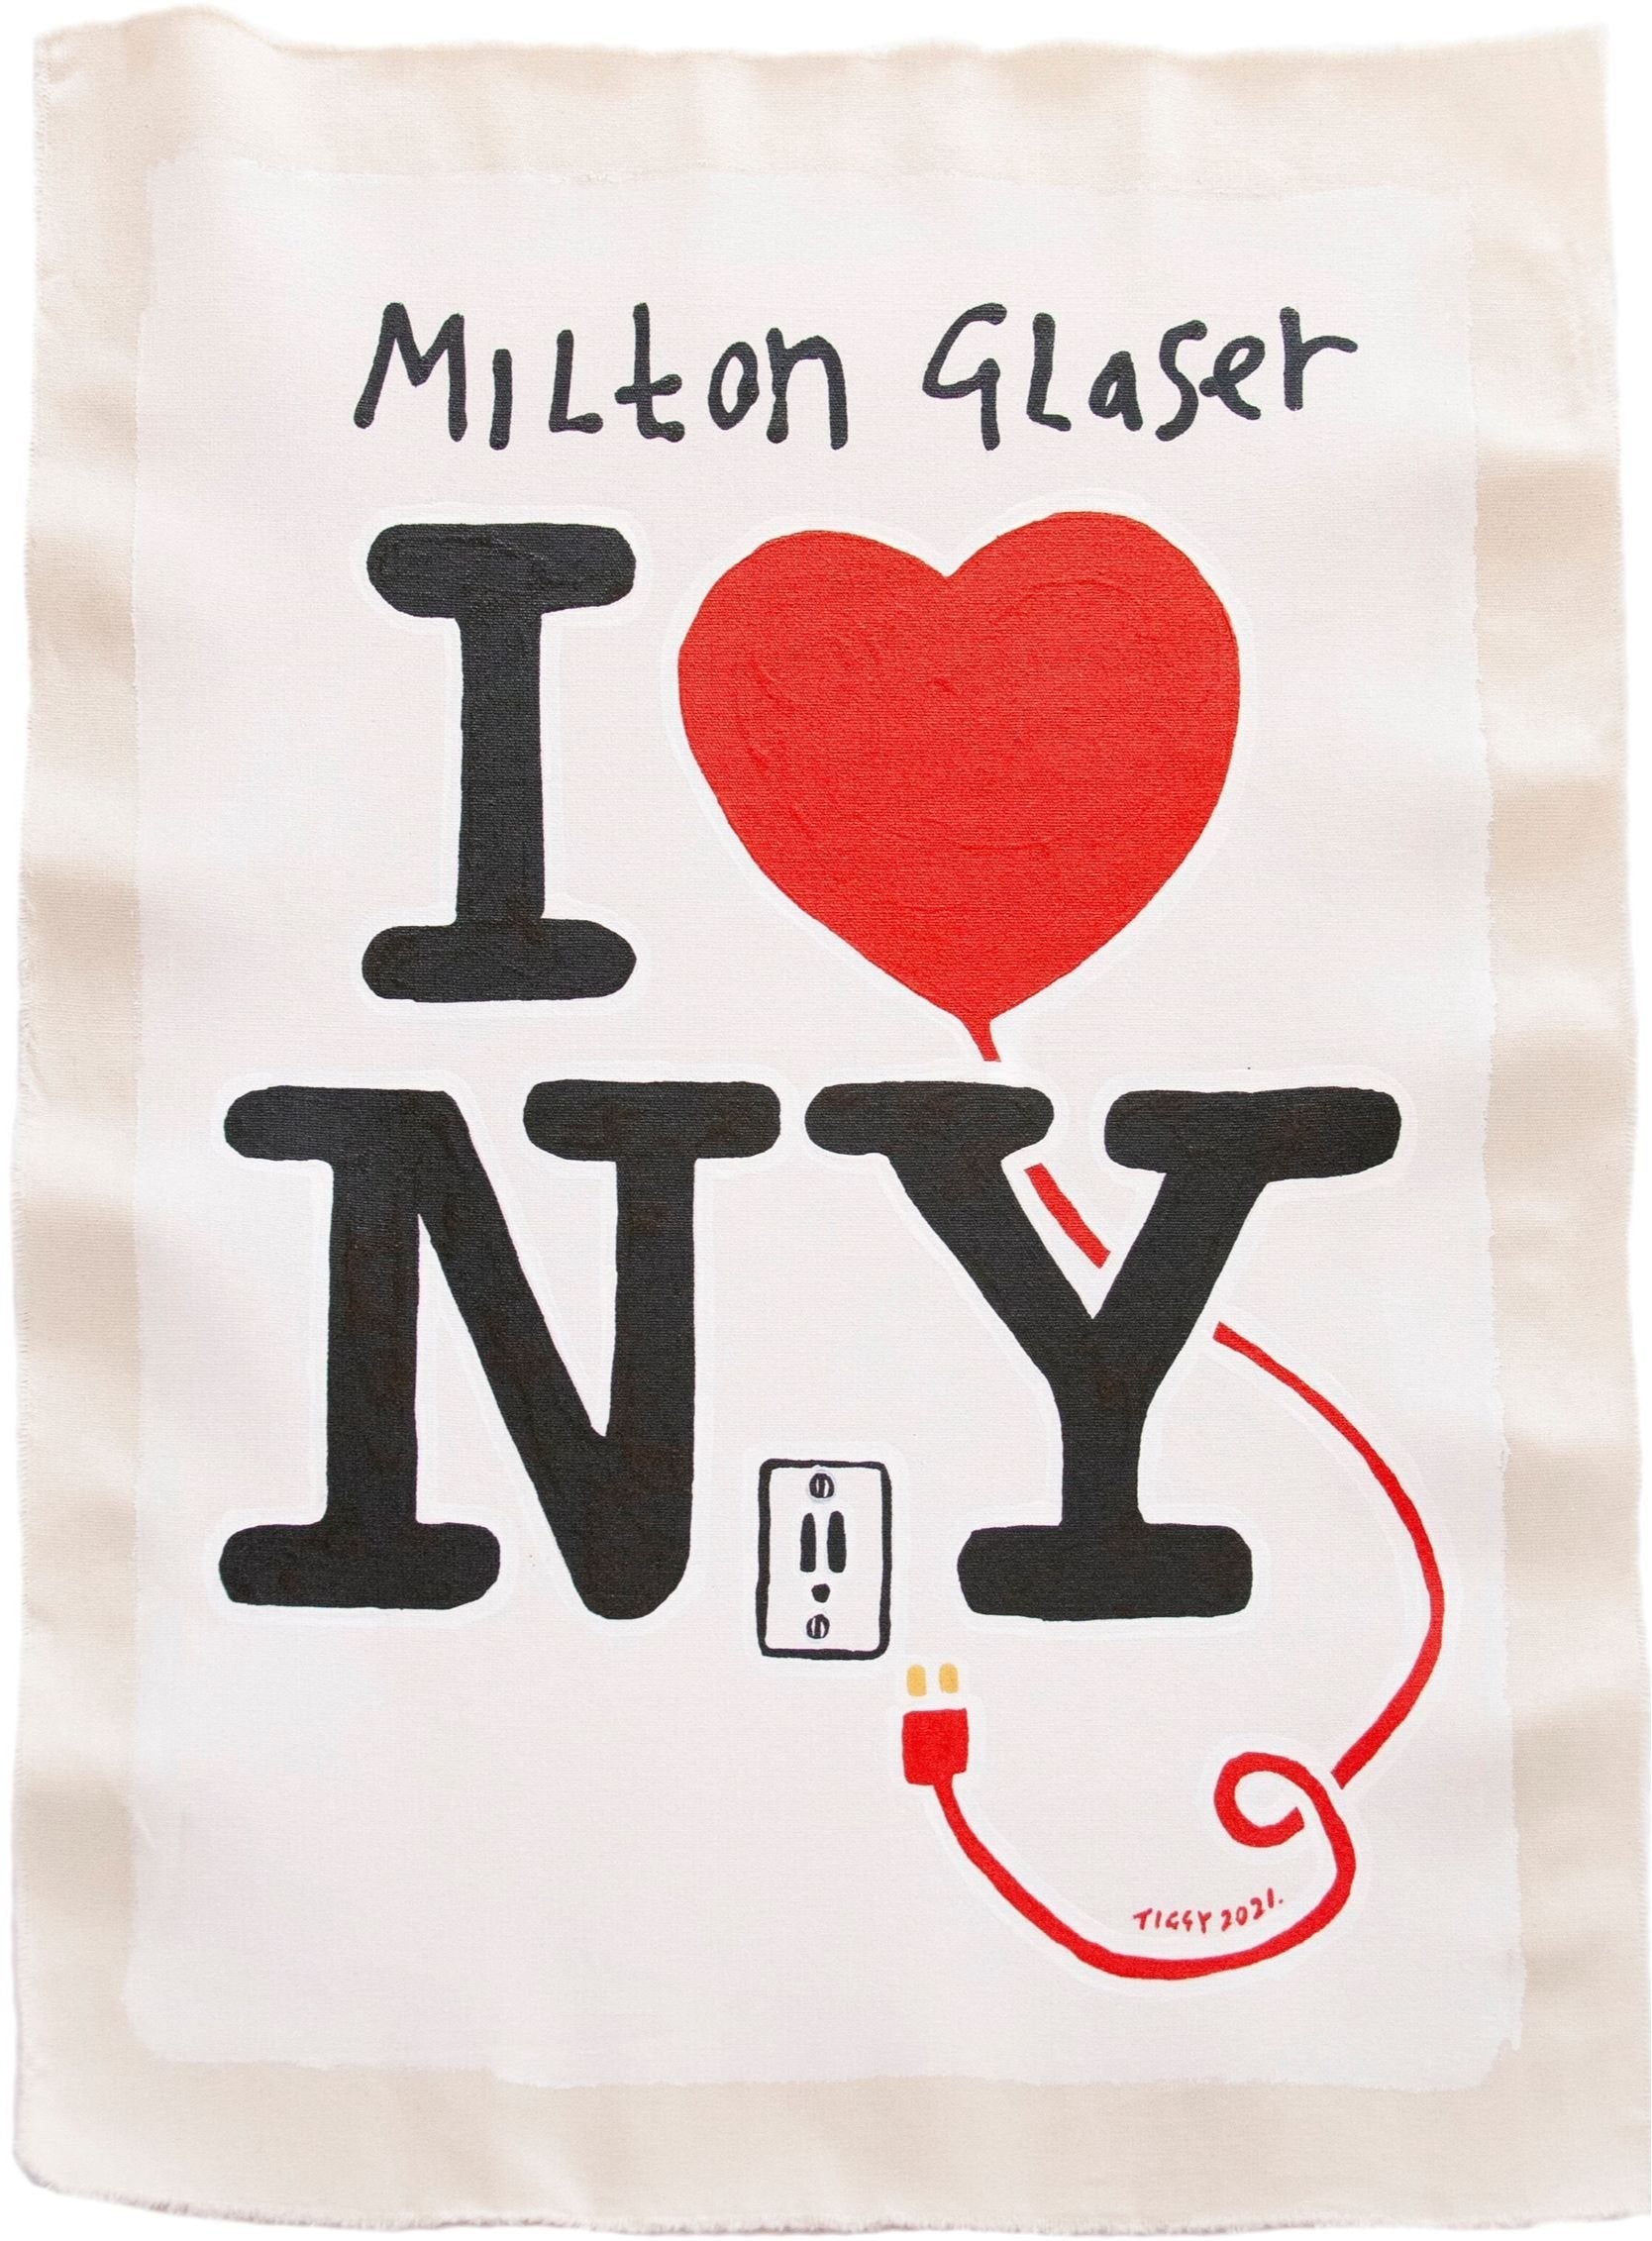 Milton Glaser, Store